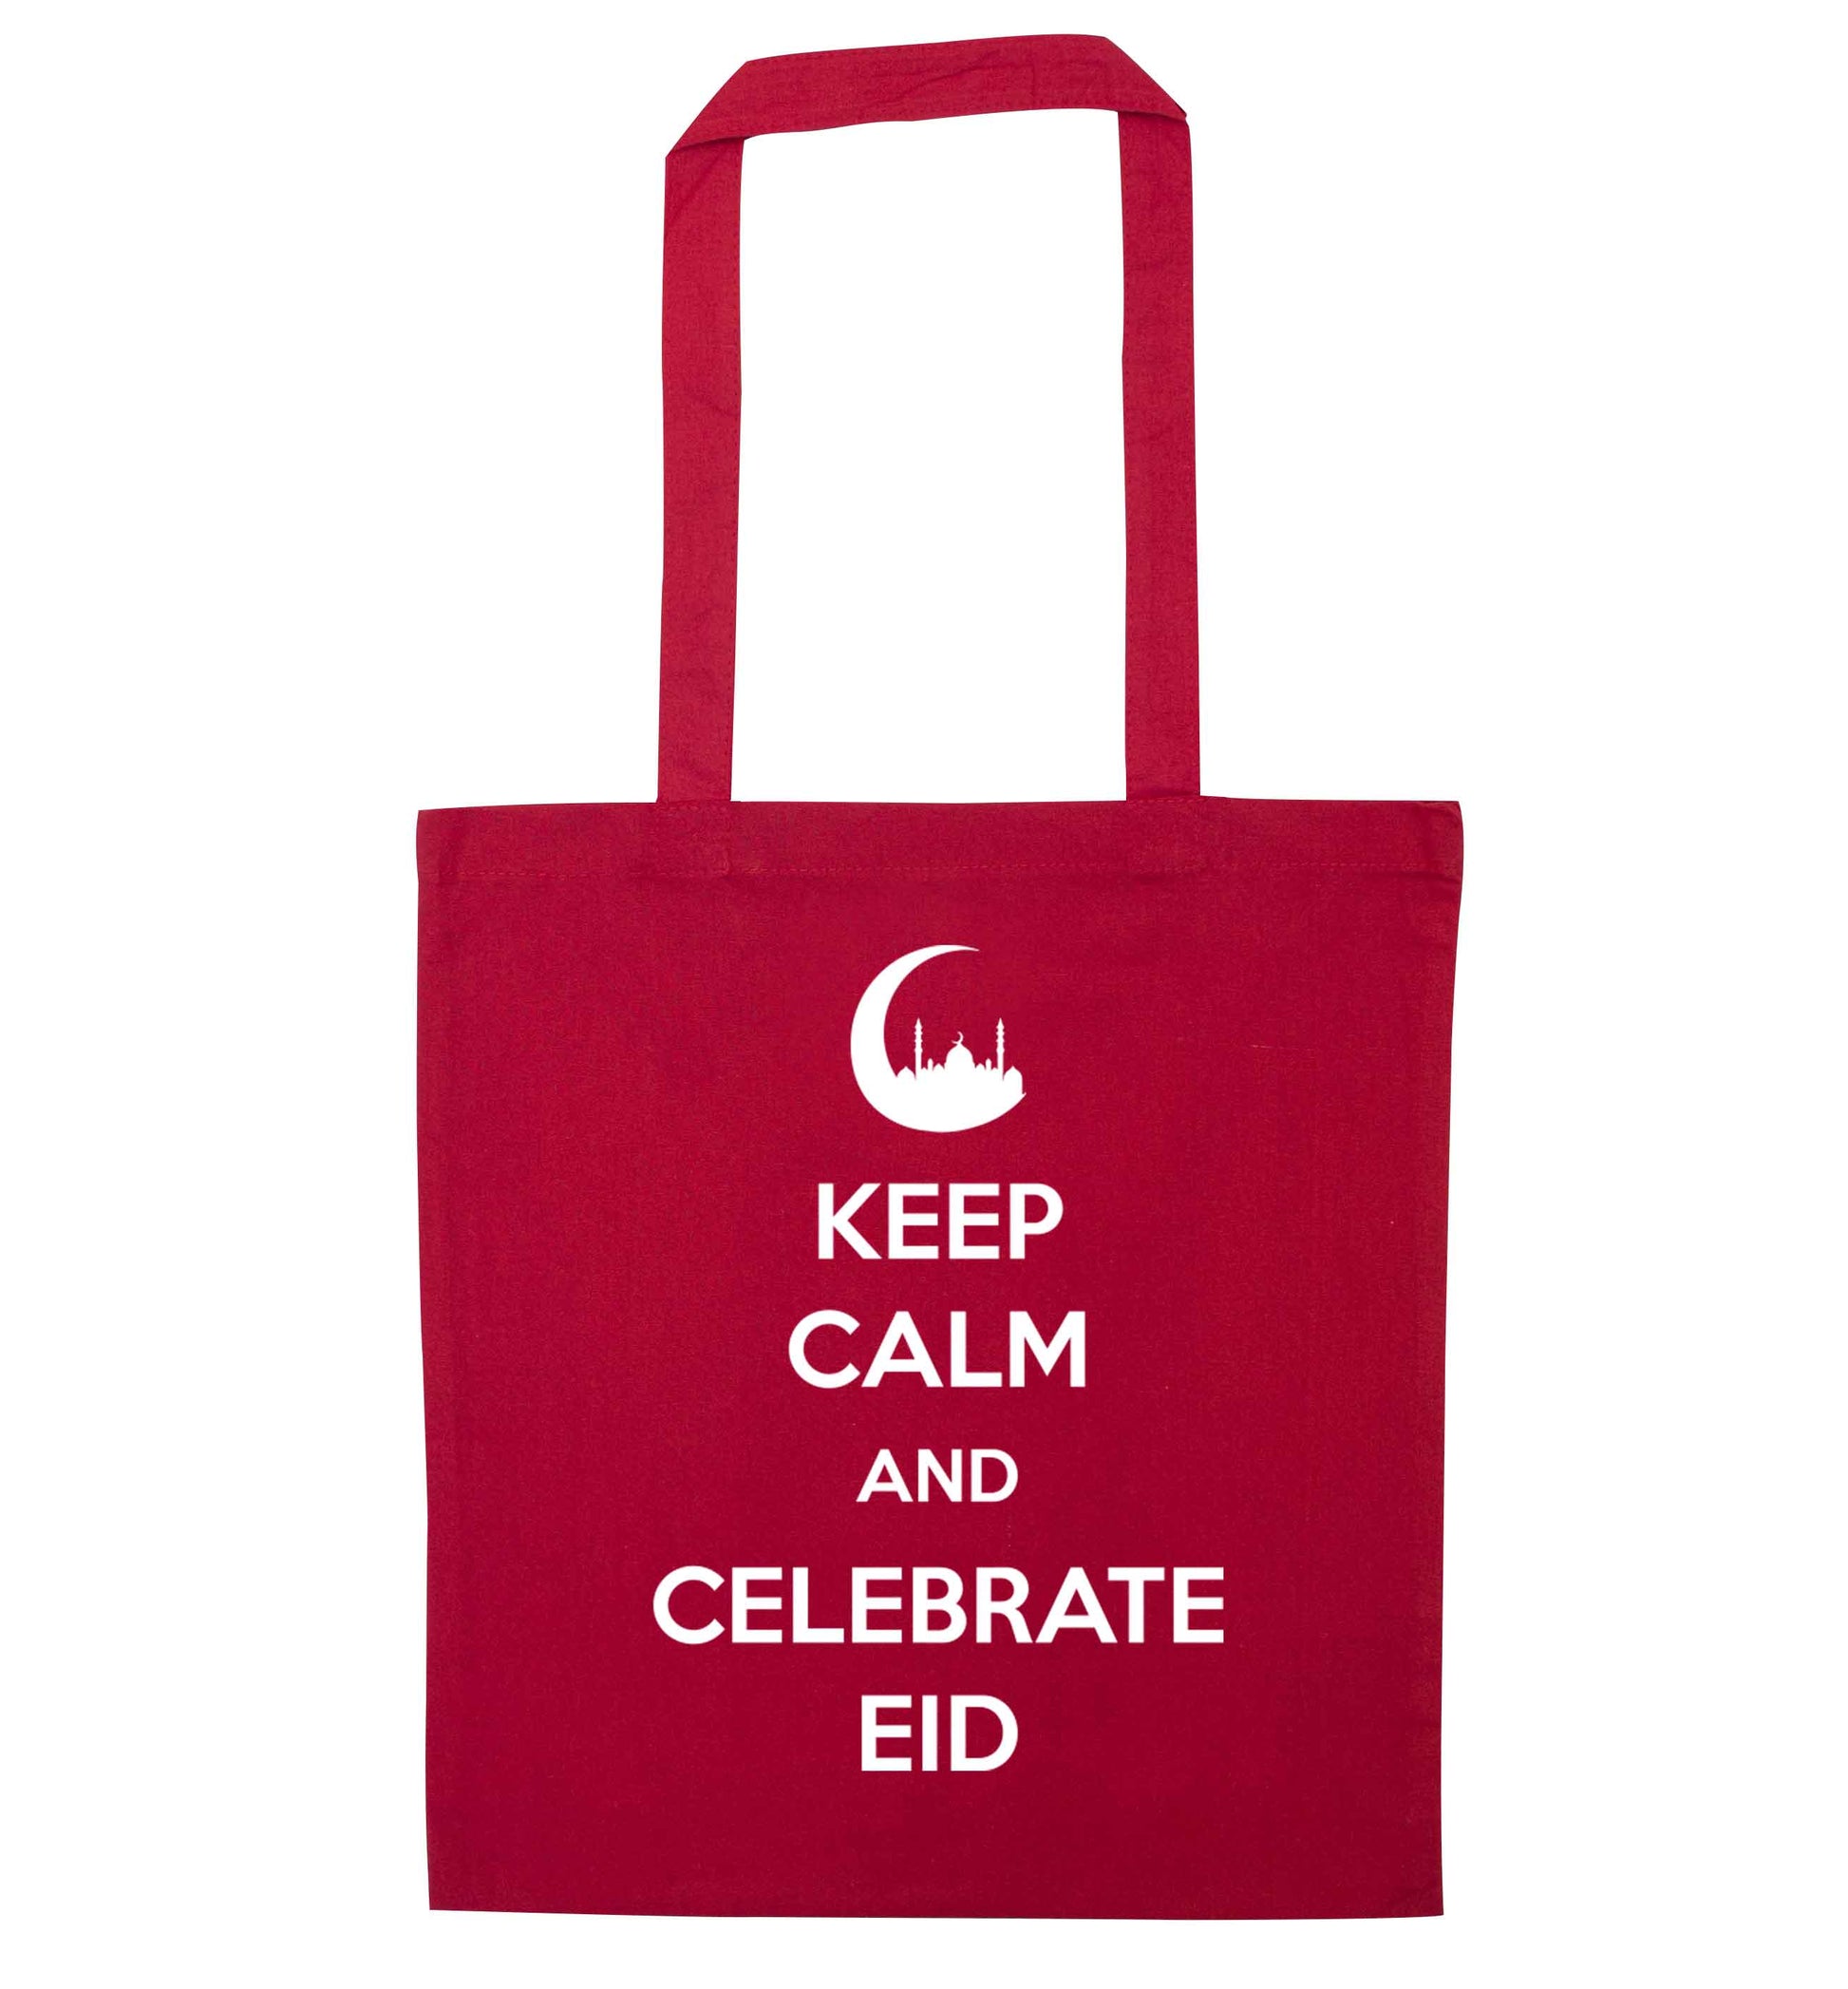 Keep calm and celebrate Eid red tote bag